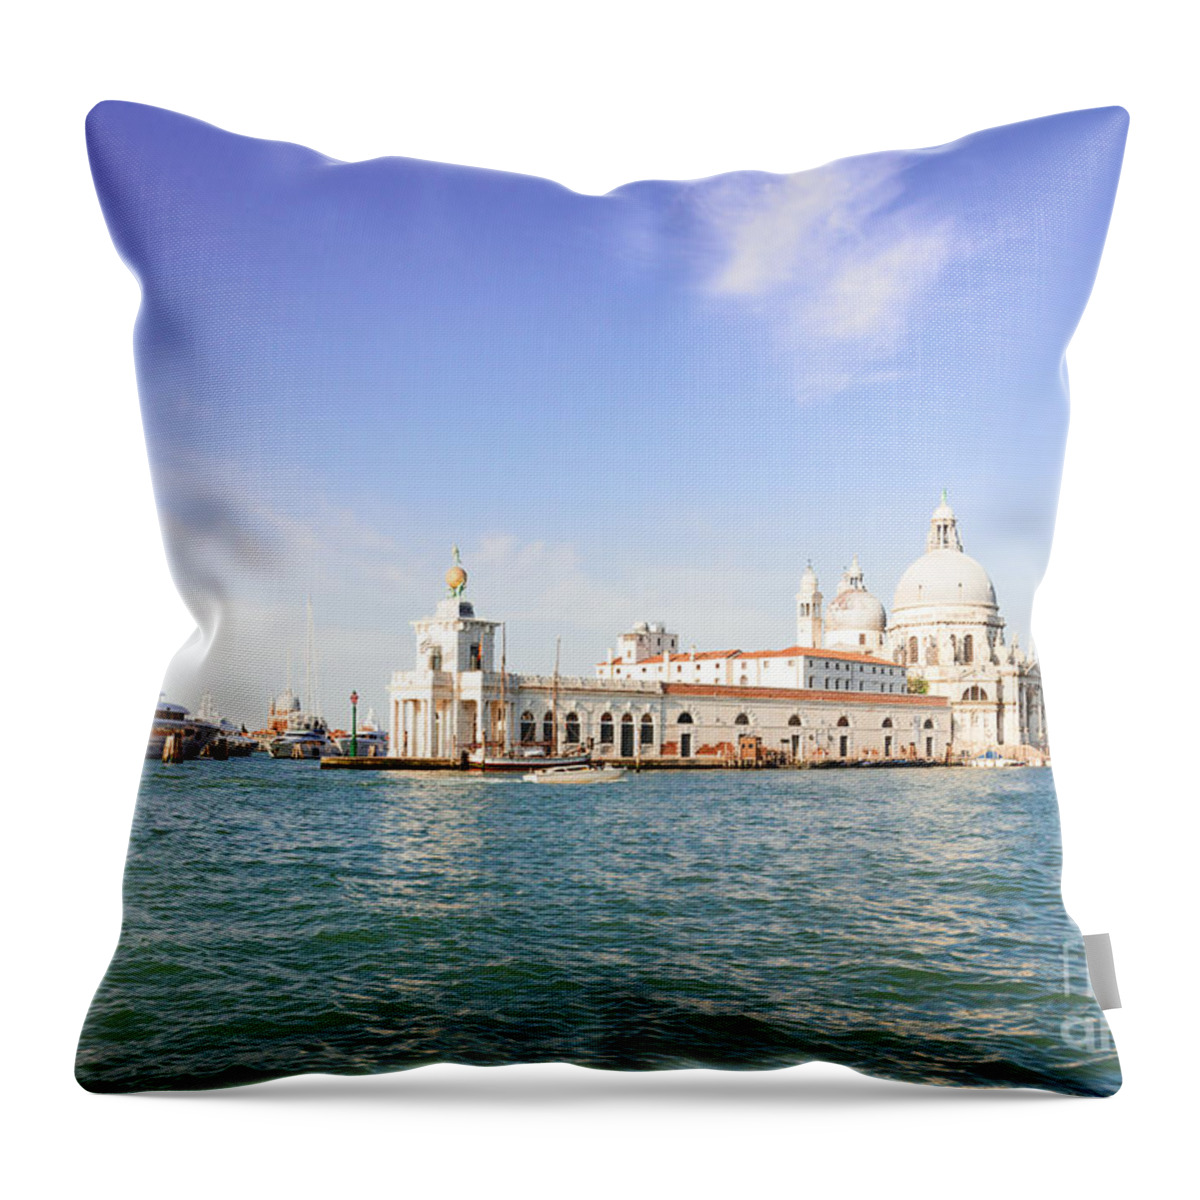 Venezia Throw Pillow featuring the photograph Basilica Santa Maria della Salute and Dogana by Anastasy Yarmolovich